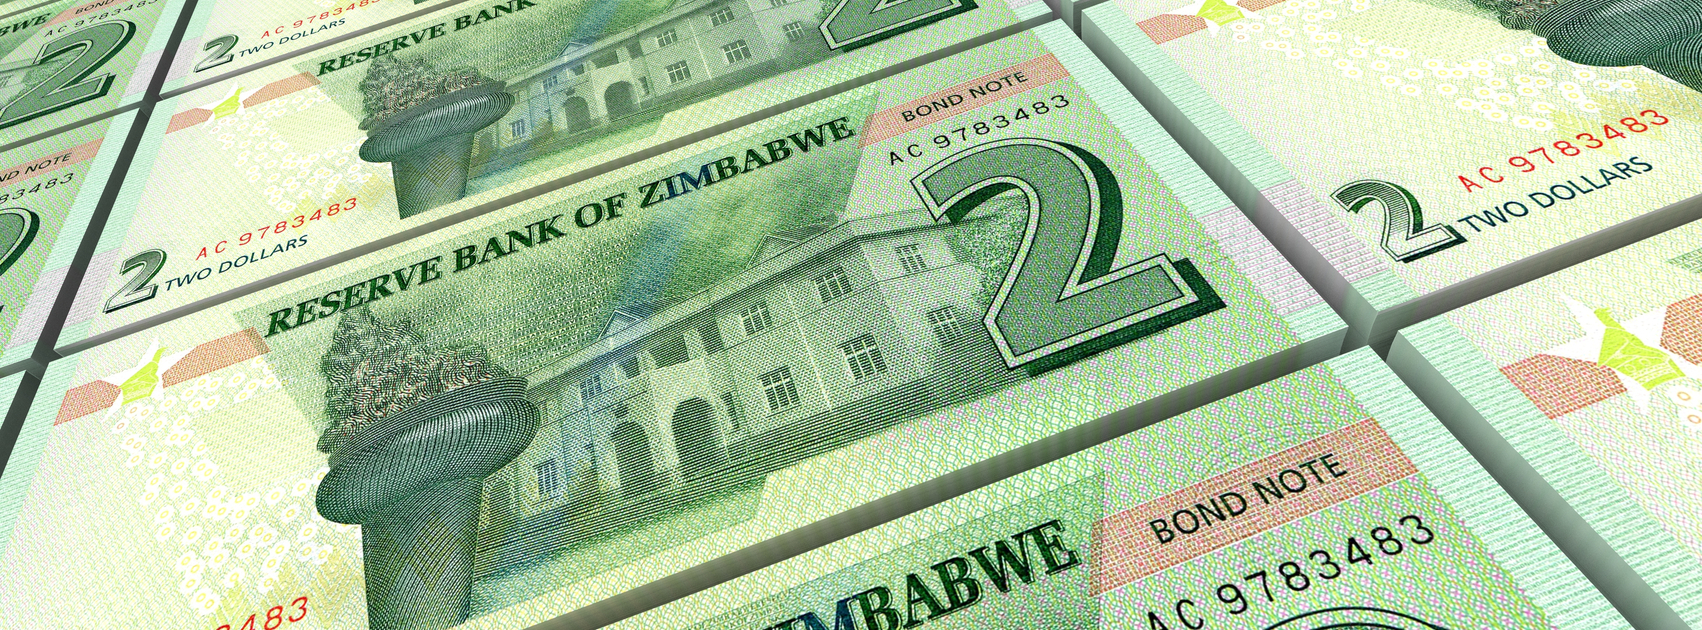 Forex trading in zimbabwe